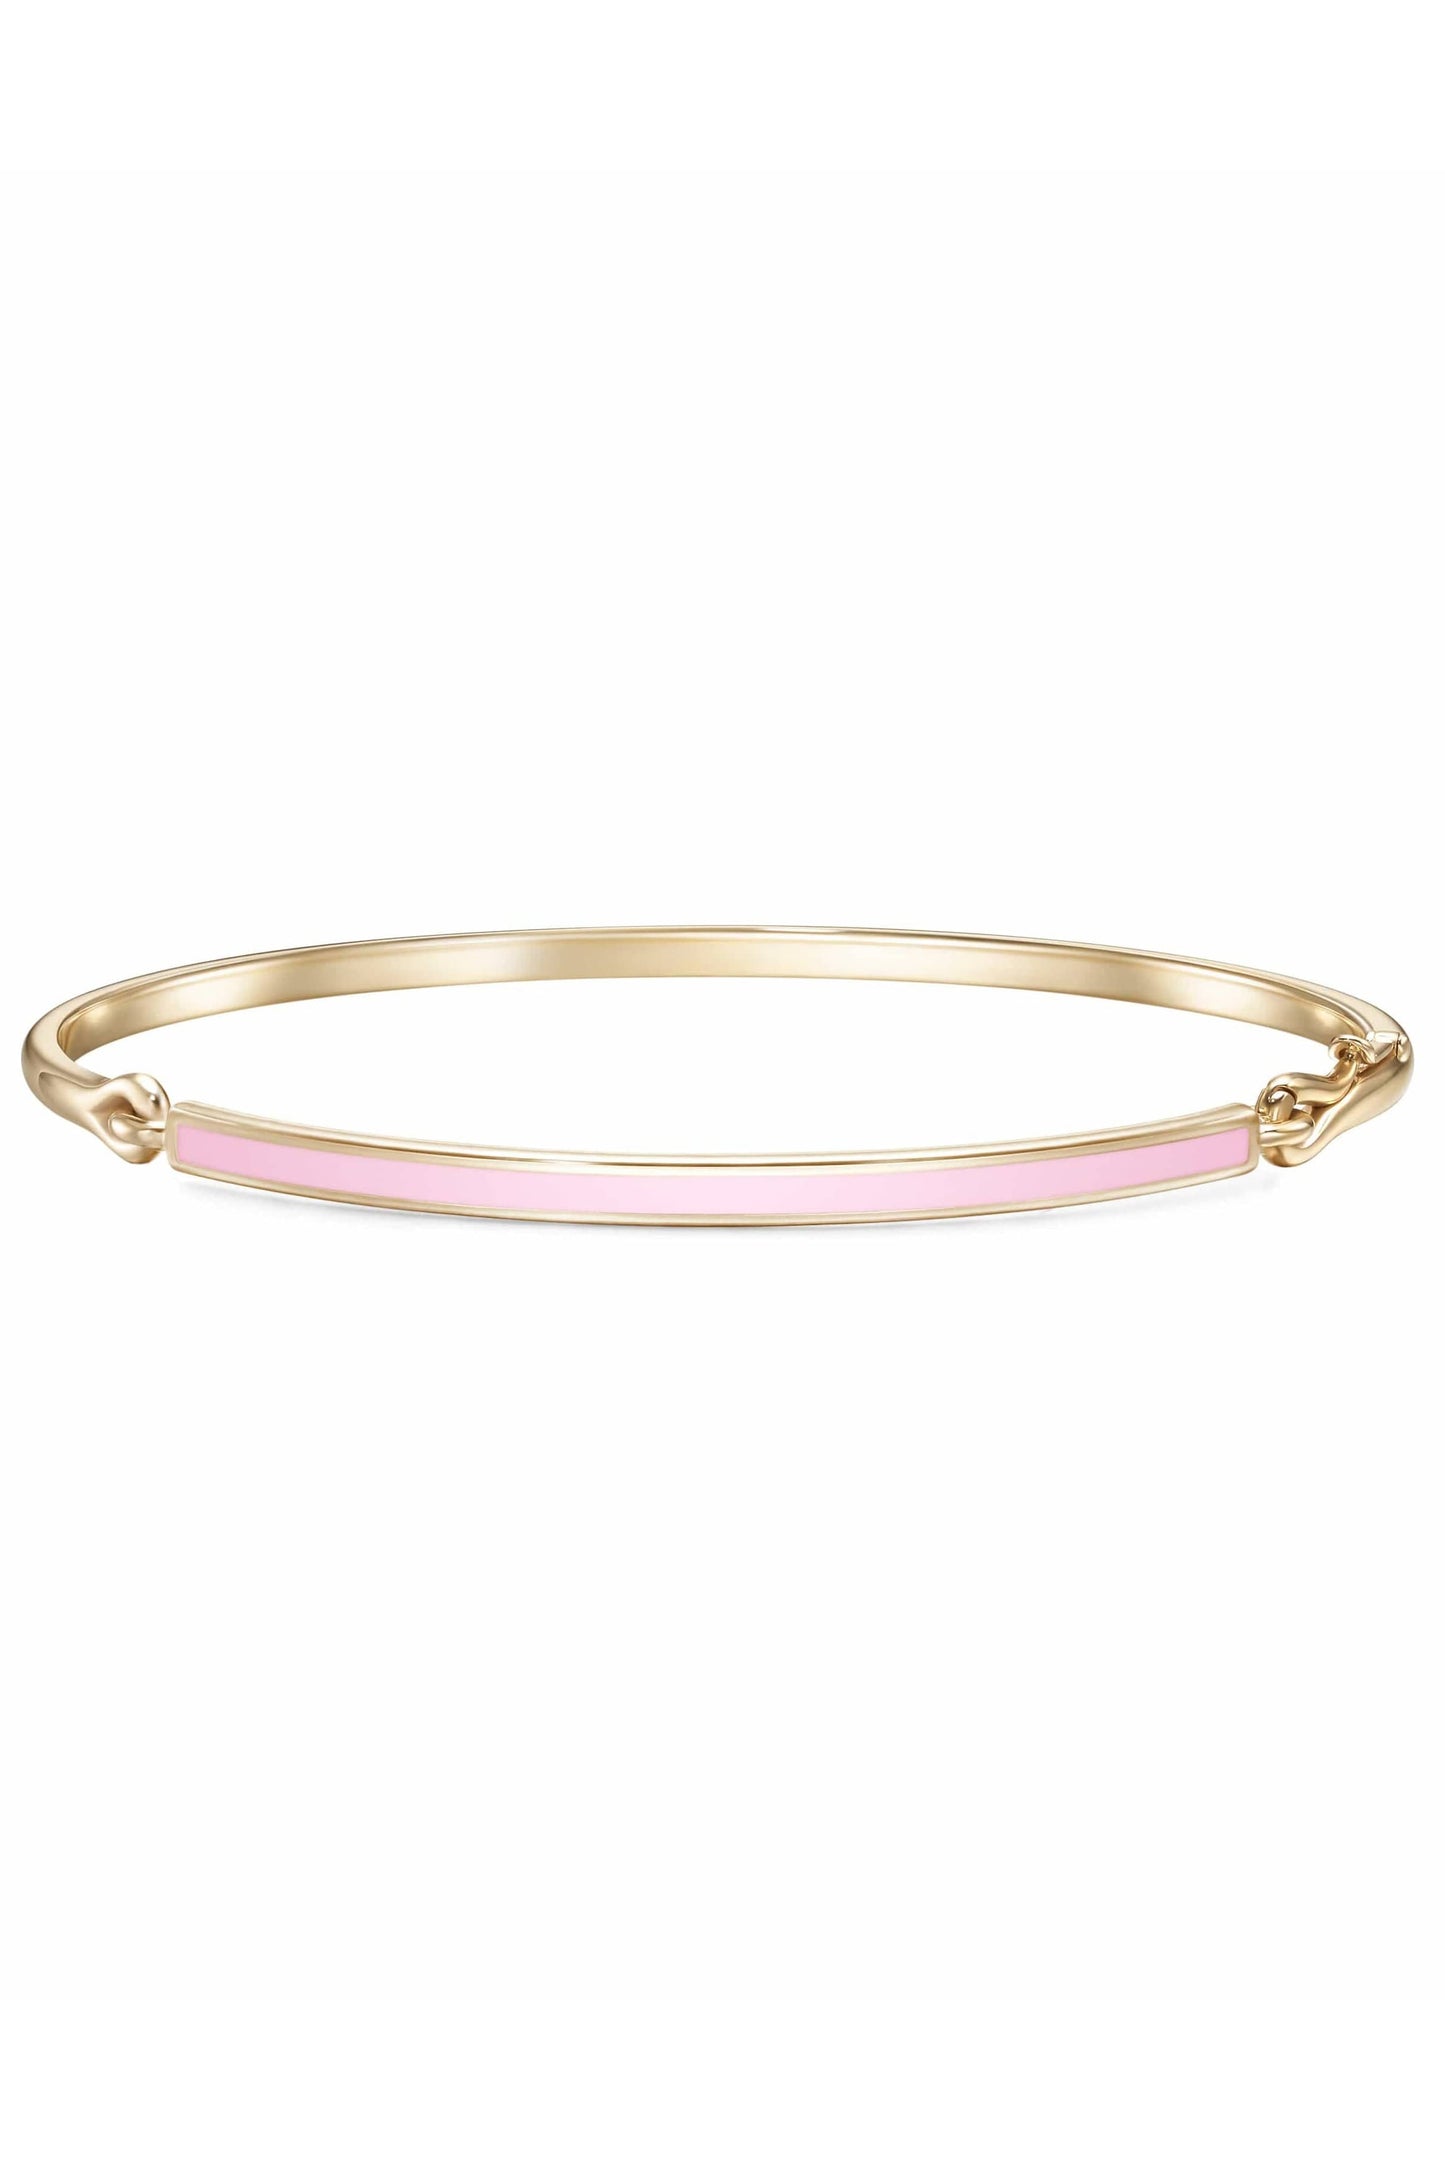 MELISSA KAYE-Marissa Pink Lenox Bracelet-YELLOW GOLD